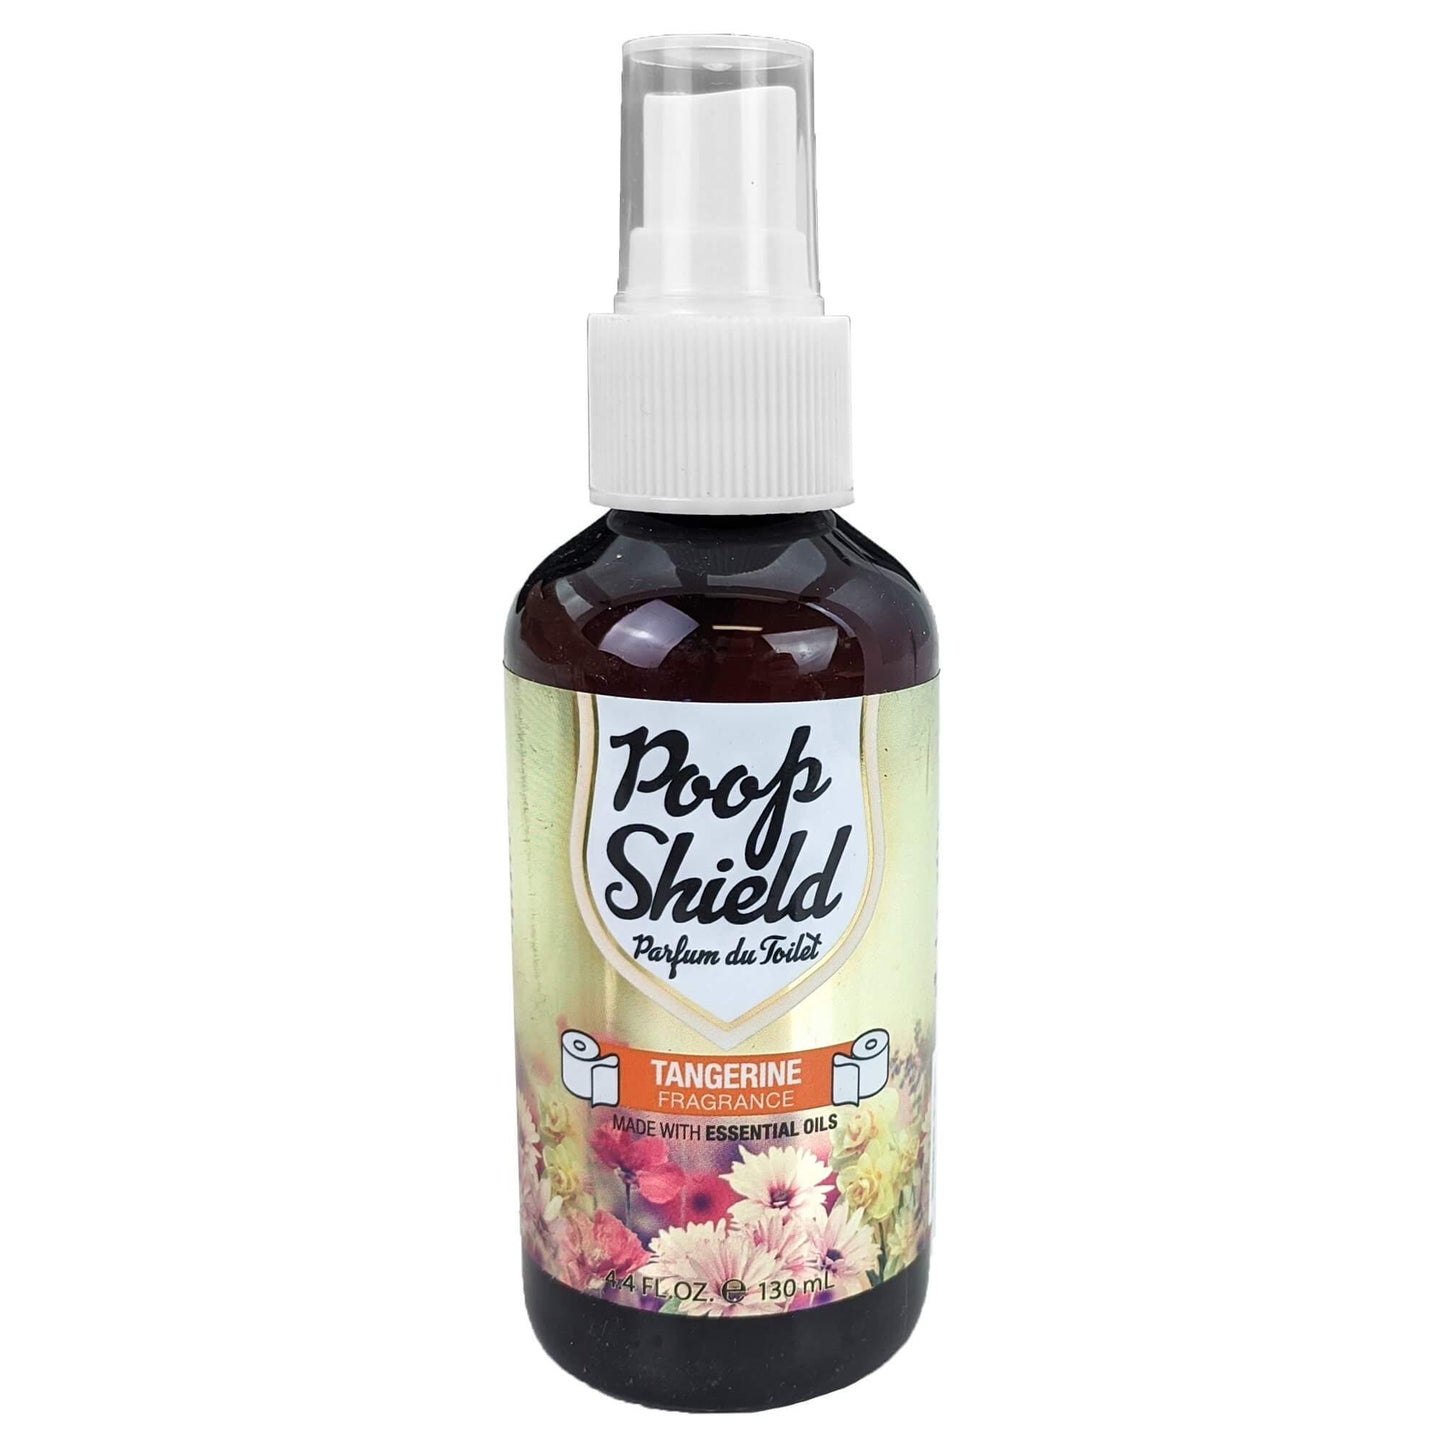 Mystic Romance Poop Shield Restroom Spray 4.4oz, Tangerine Scent